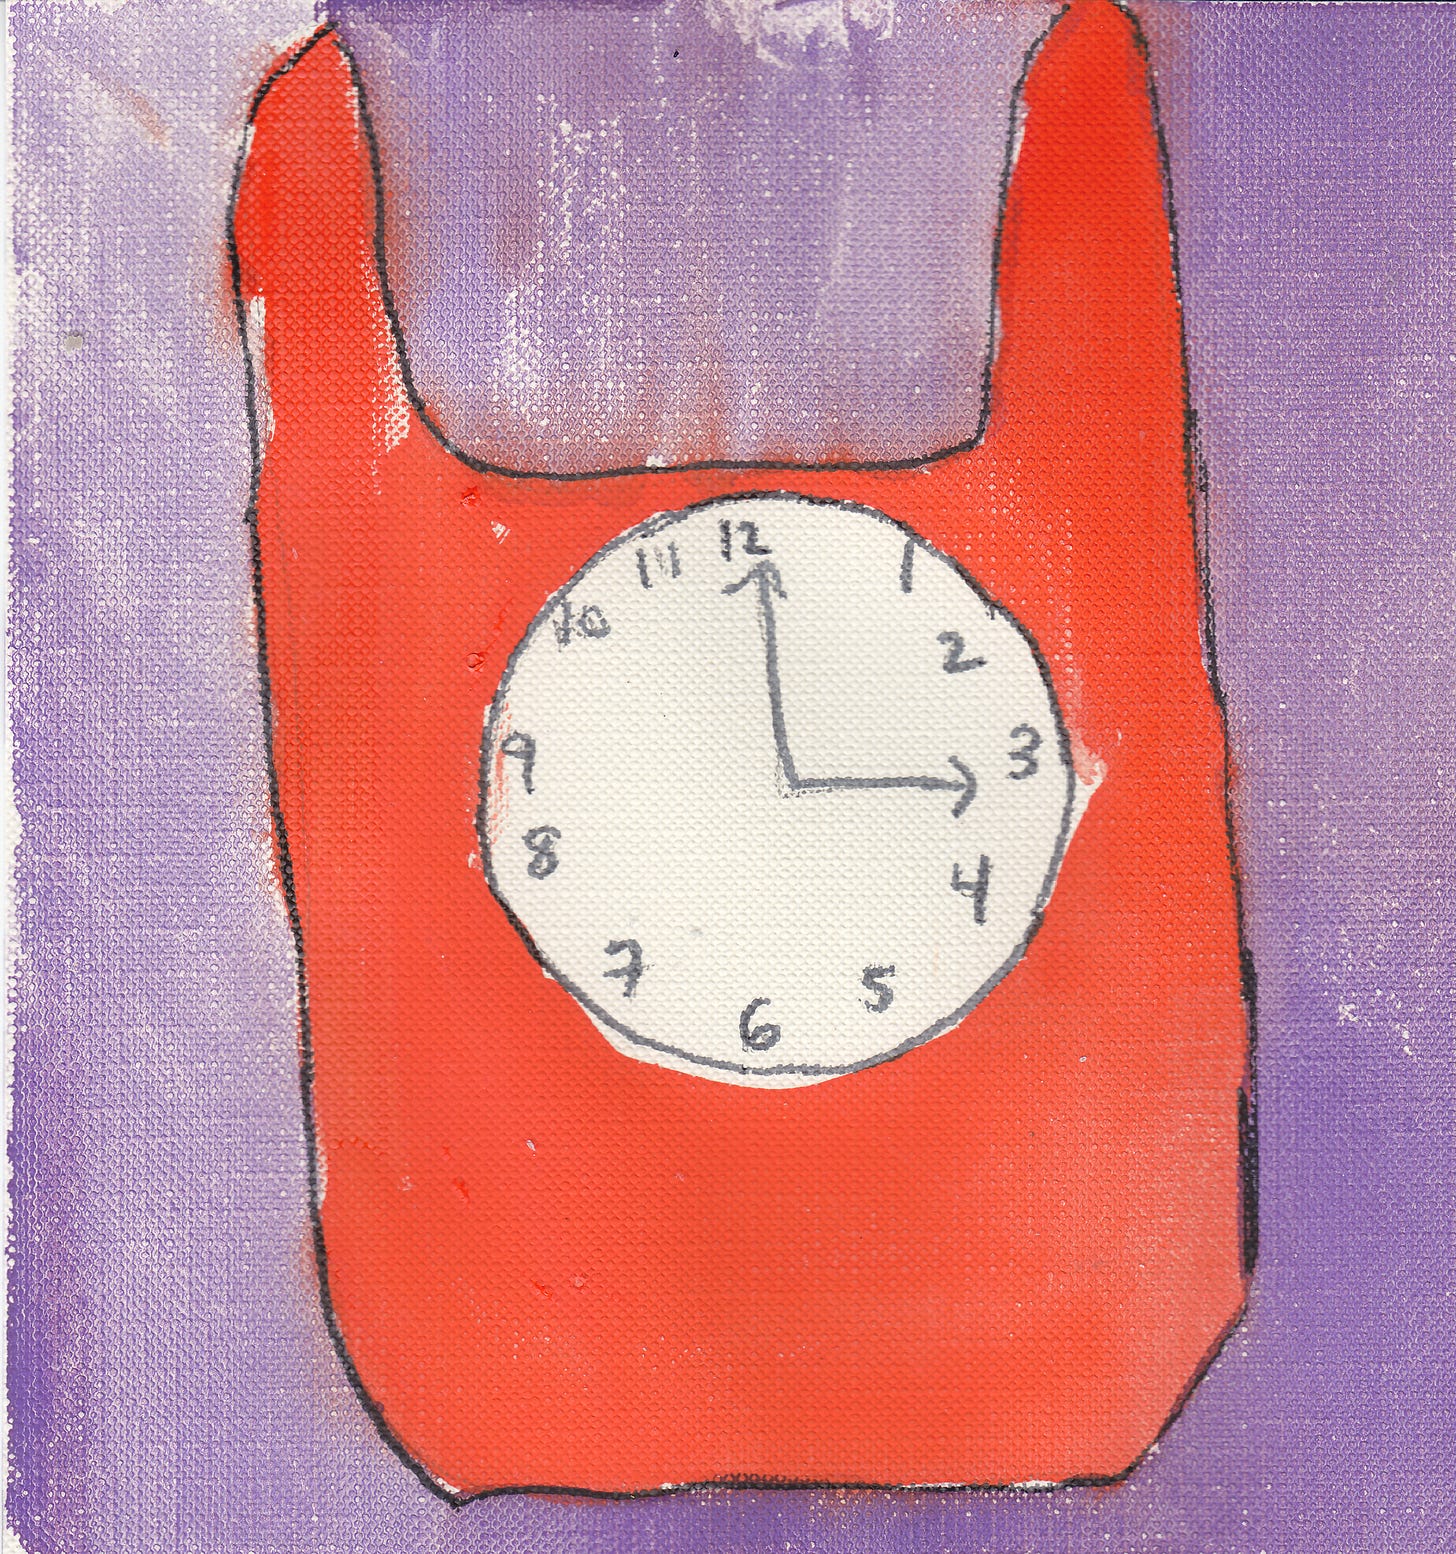 orange bag with clock, purple background